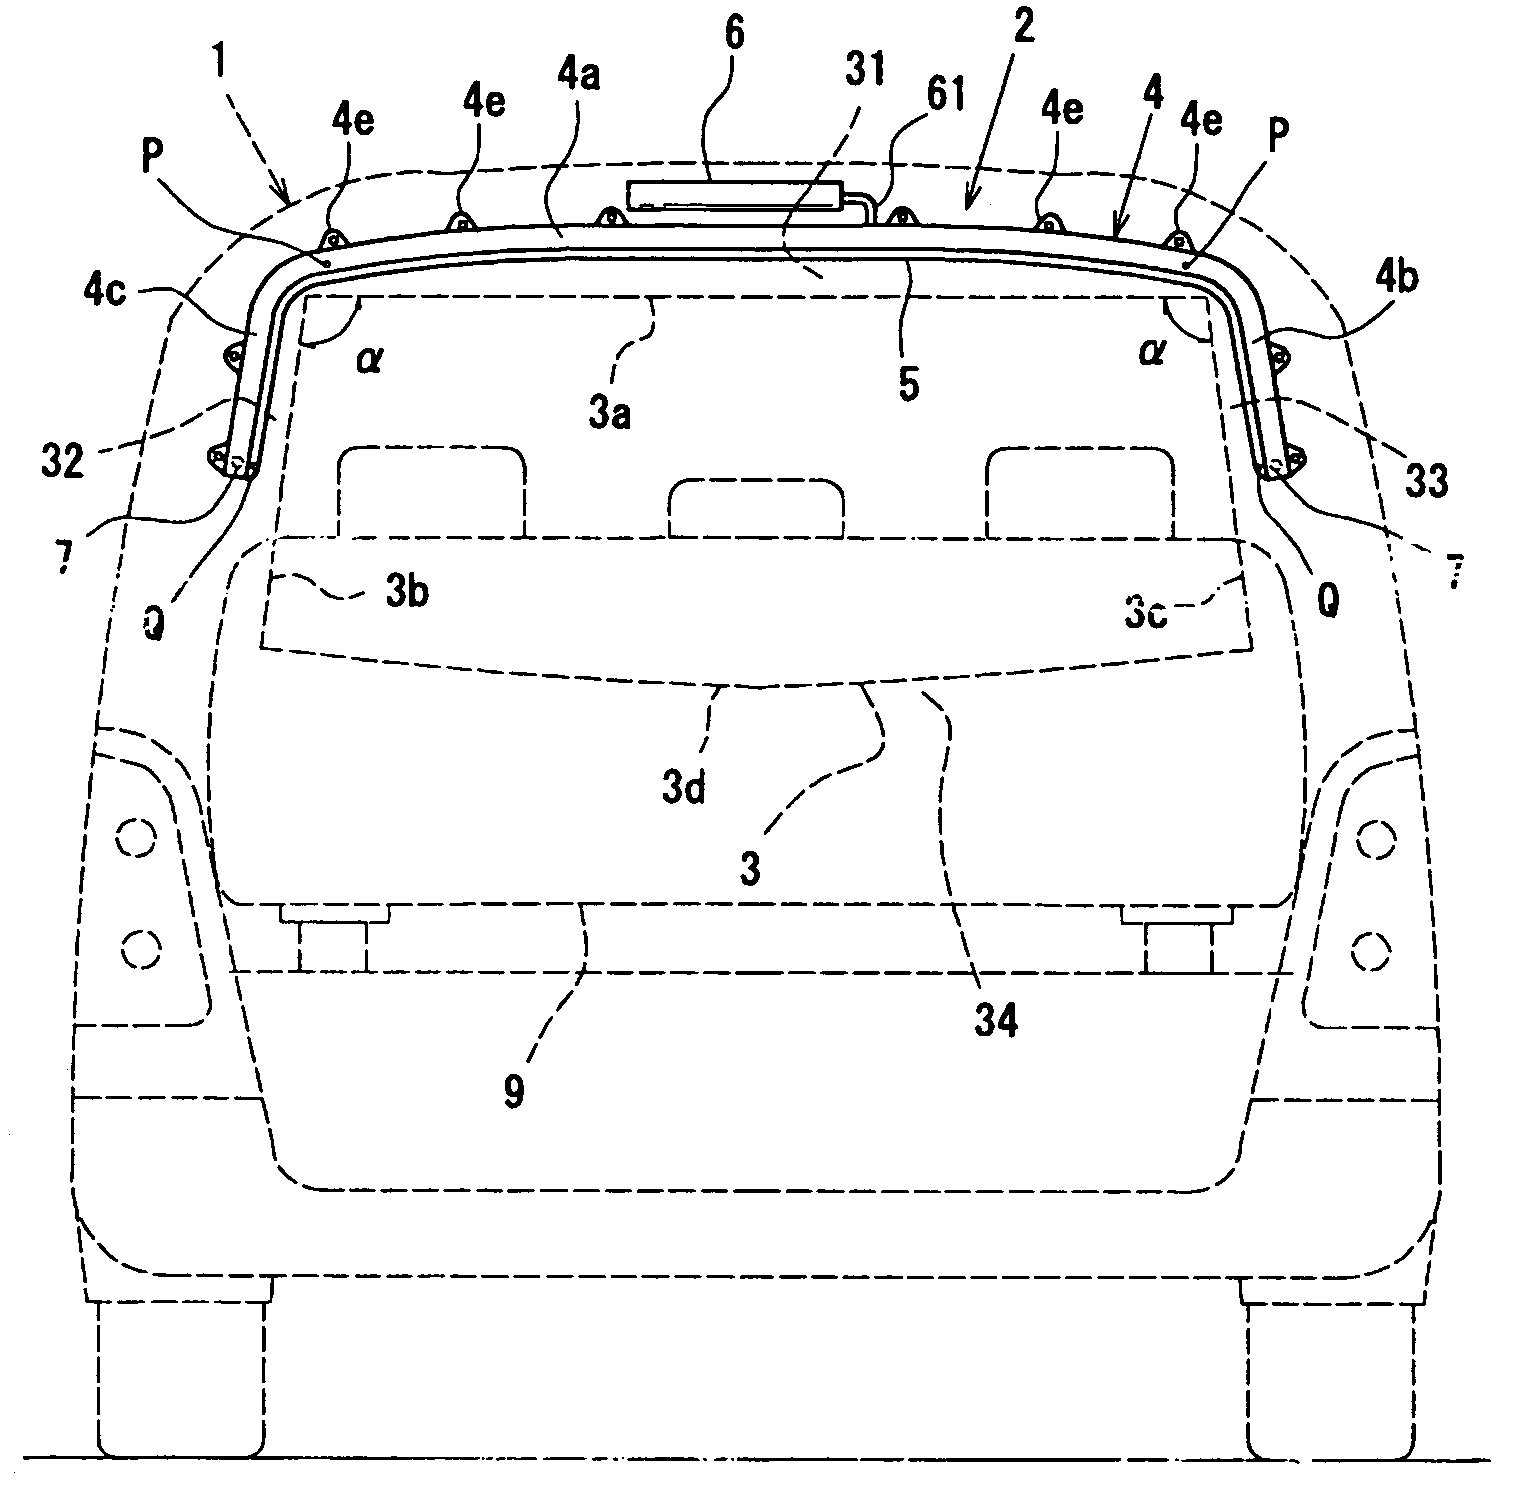 Curtain airbag device